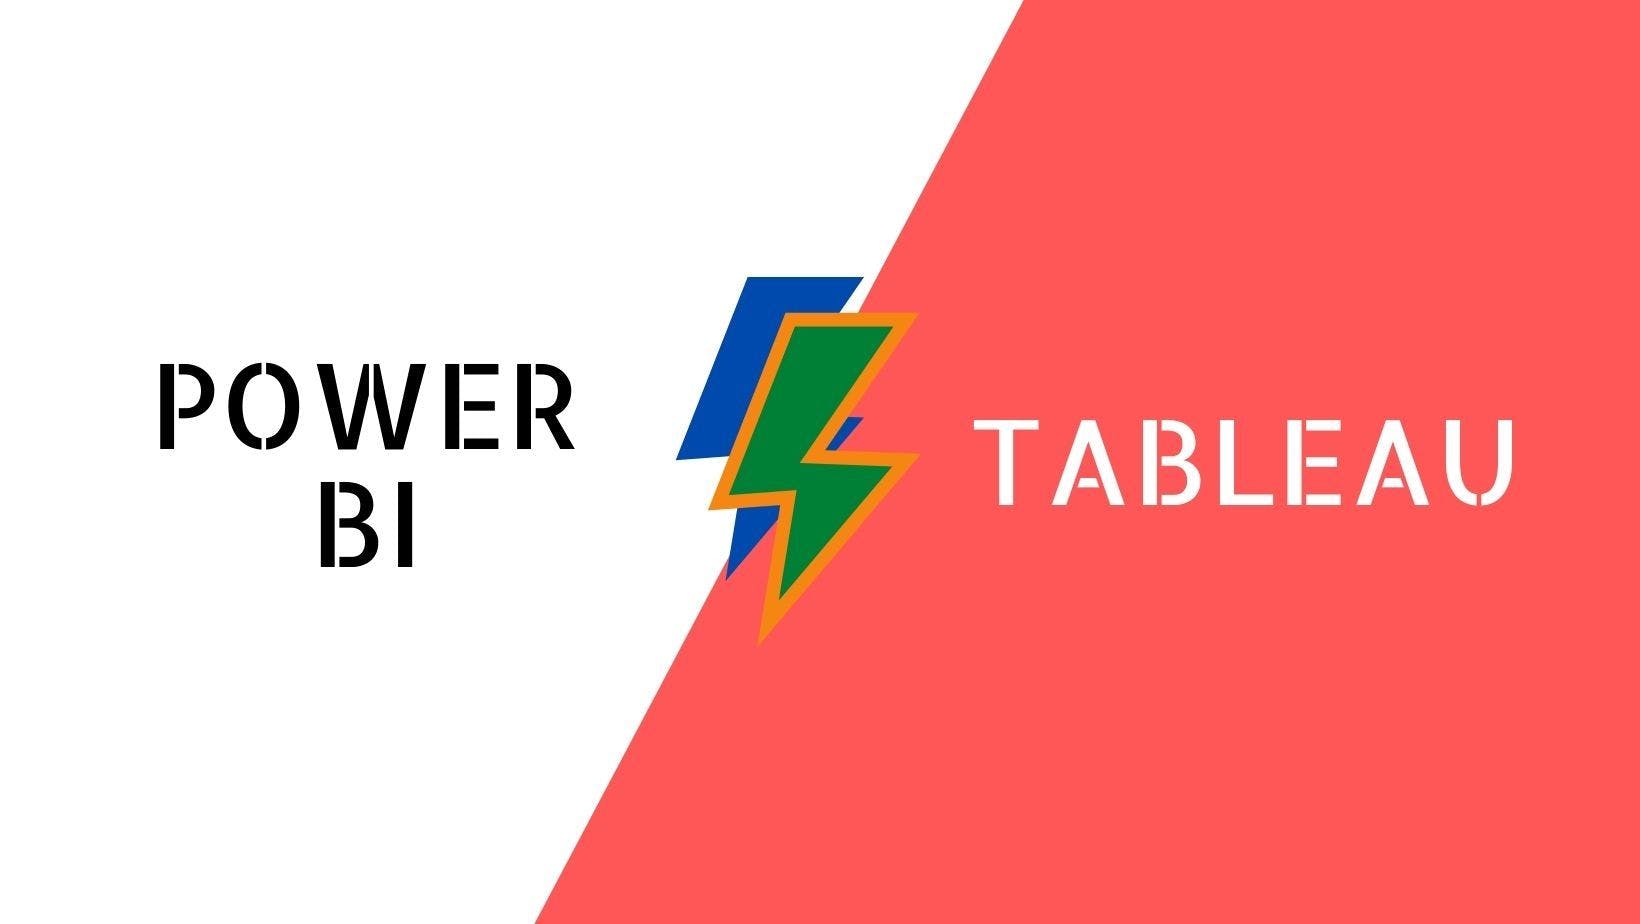 featured image - Tableau Vs. Power BI: The Complete Comparison